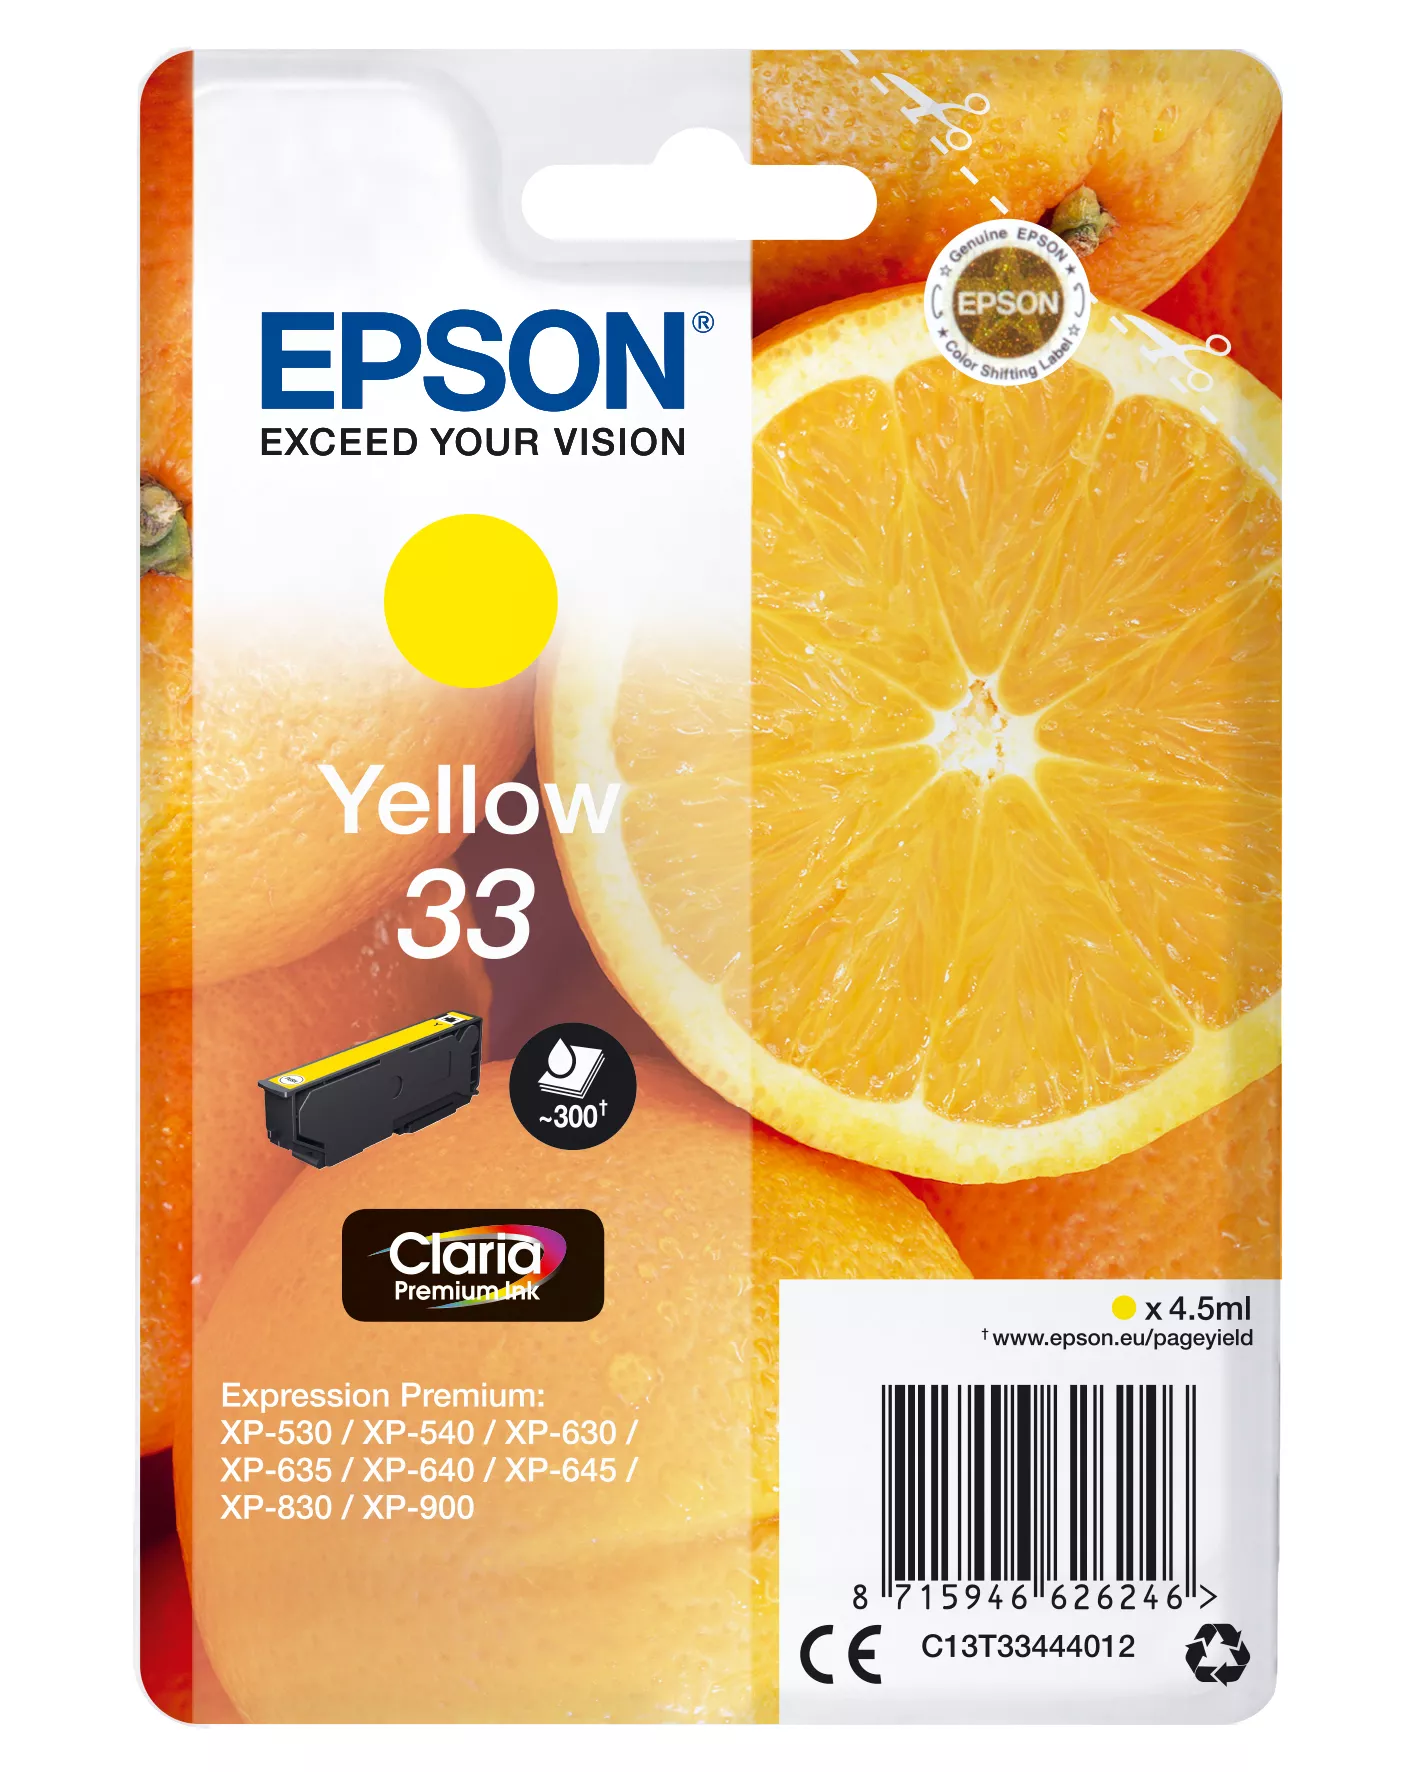 Vente EPSON Cartouche Oranges Encre Claria Premium Jaune au meilleur prix